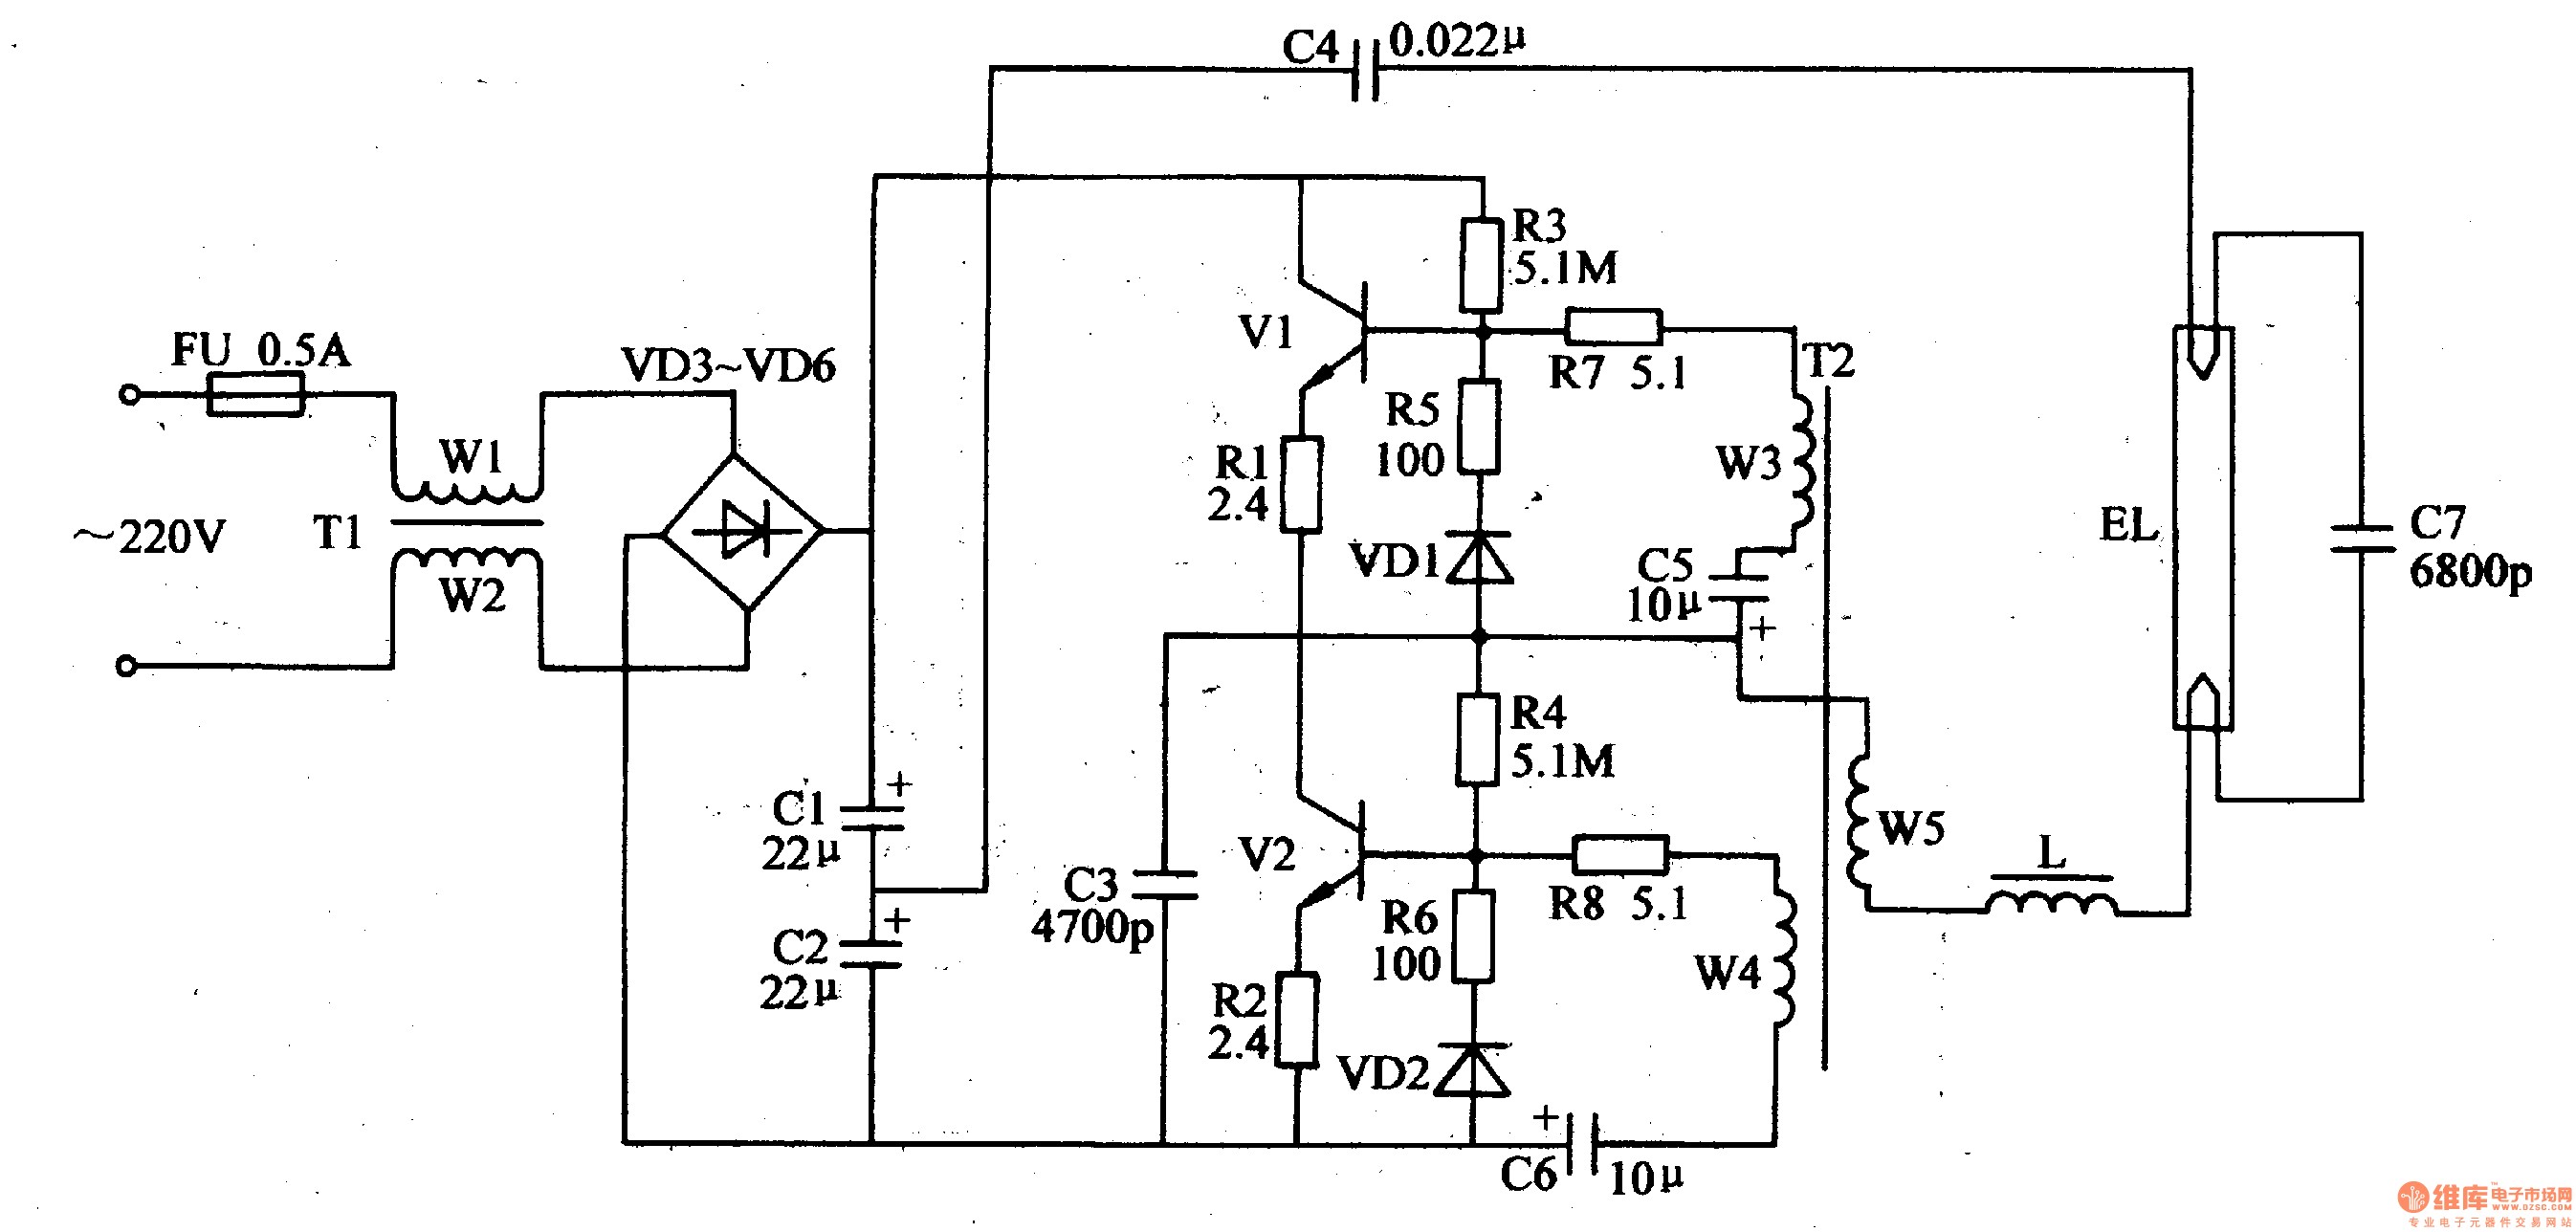 Circuit Diagram Electronic Ballast Zen transistor amplifier circuit diagram green wire electrical